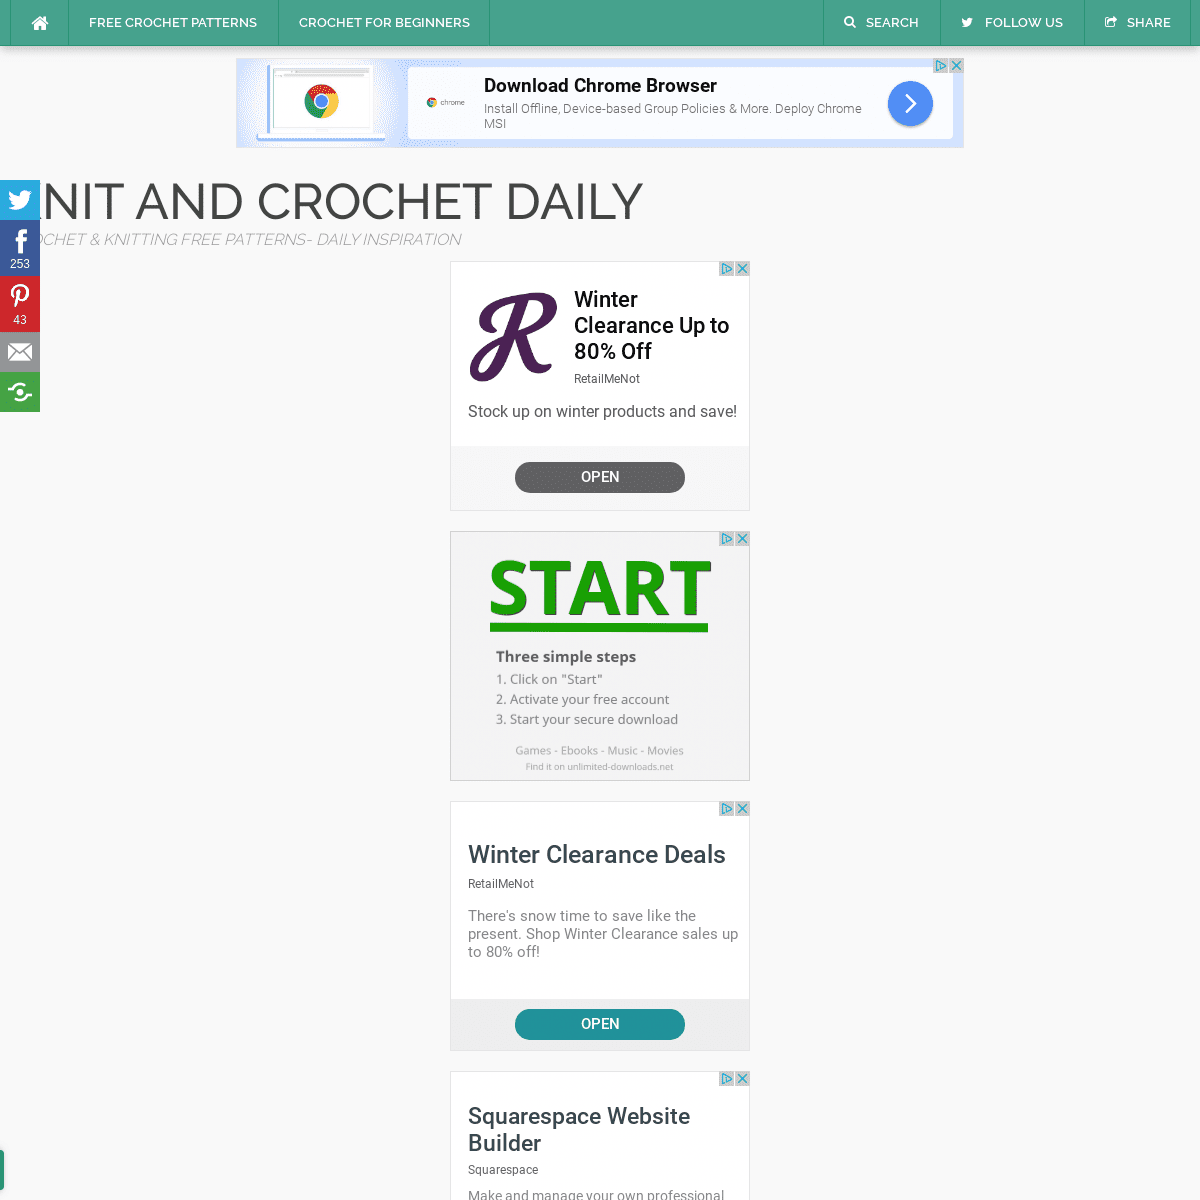 A complete backup of dailycrochet.com